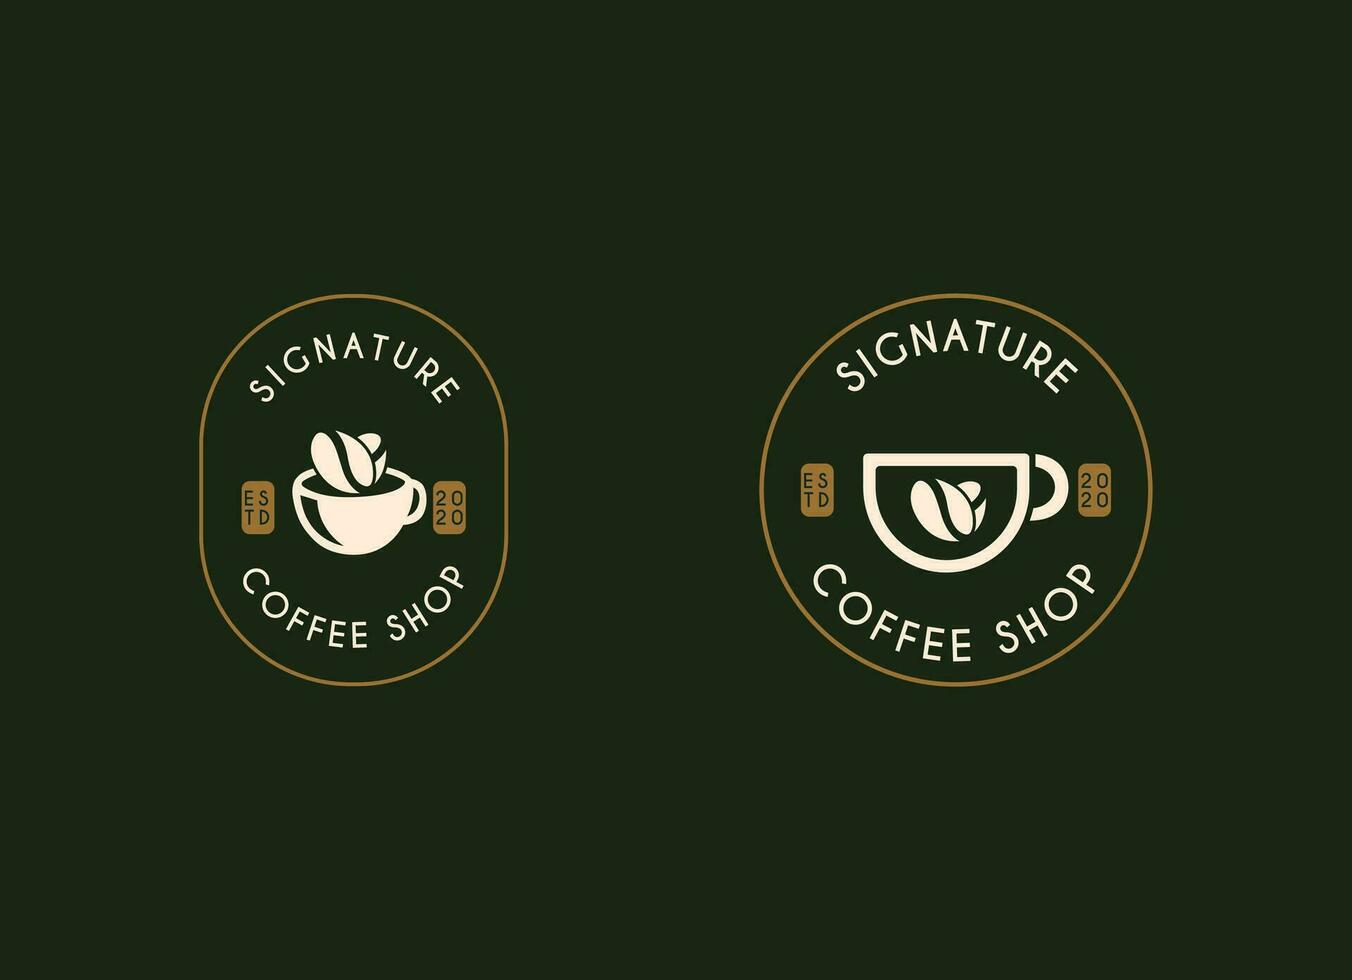 Signature café magasin logo. ancien café magasin logo conception vecteur